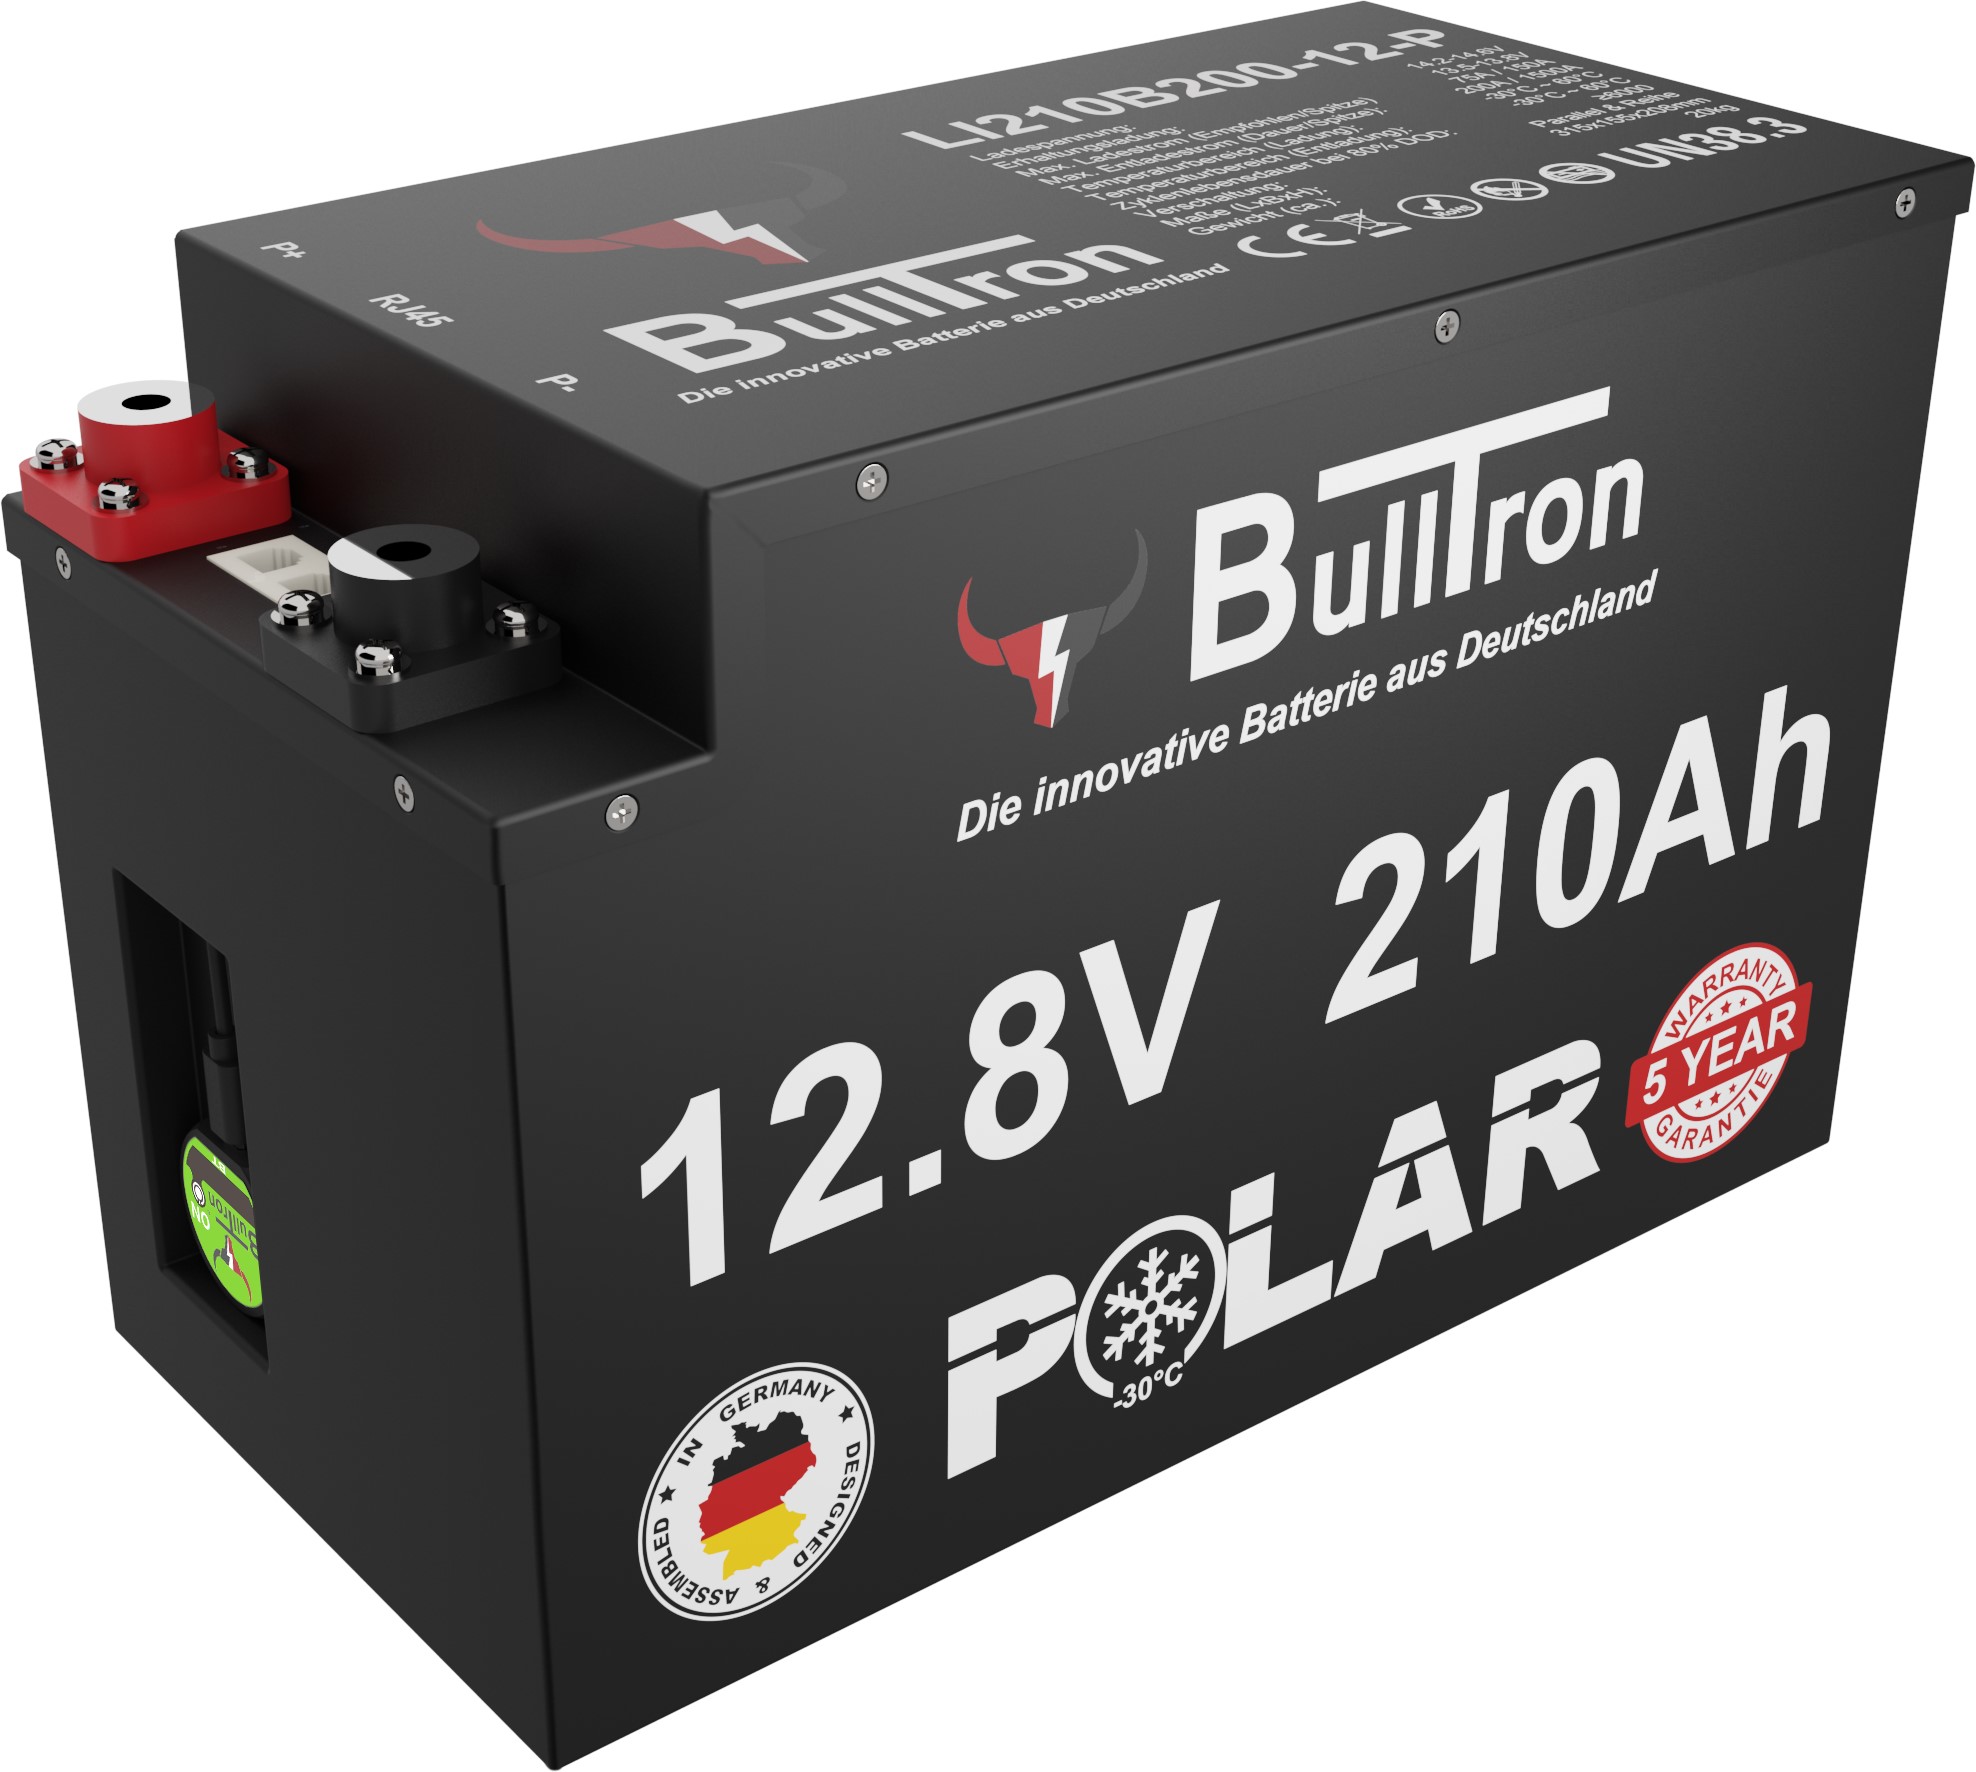 Bulltron Polar 300Ah 12.8V LiFePO4 Akku mit Smart BMS, Bluetooth